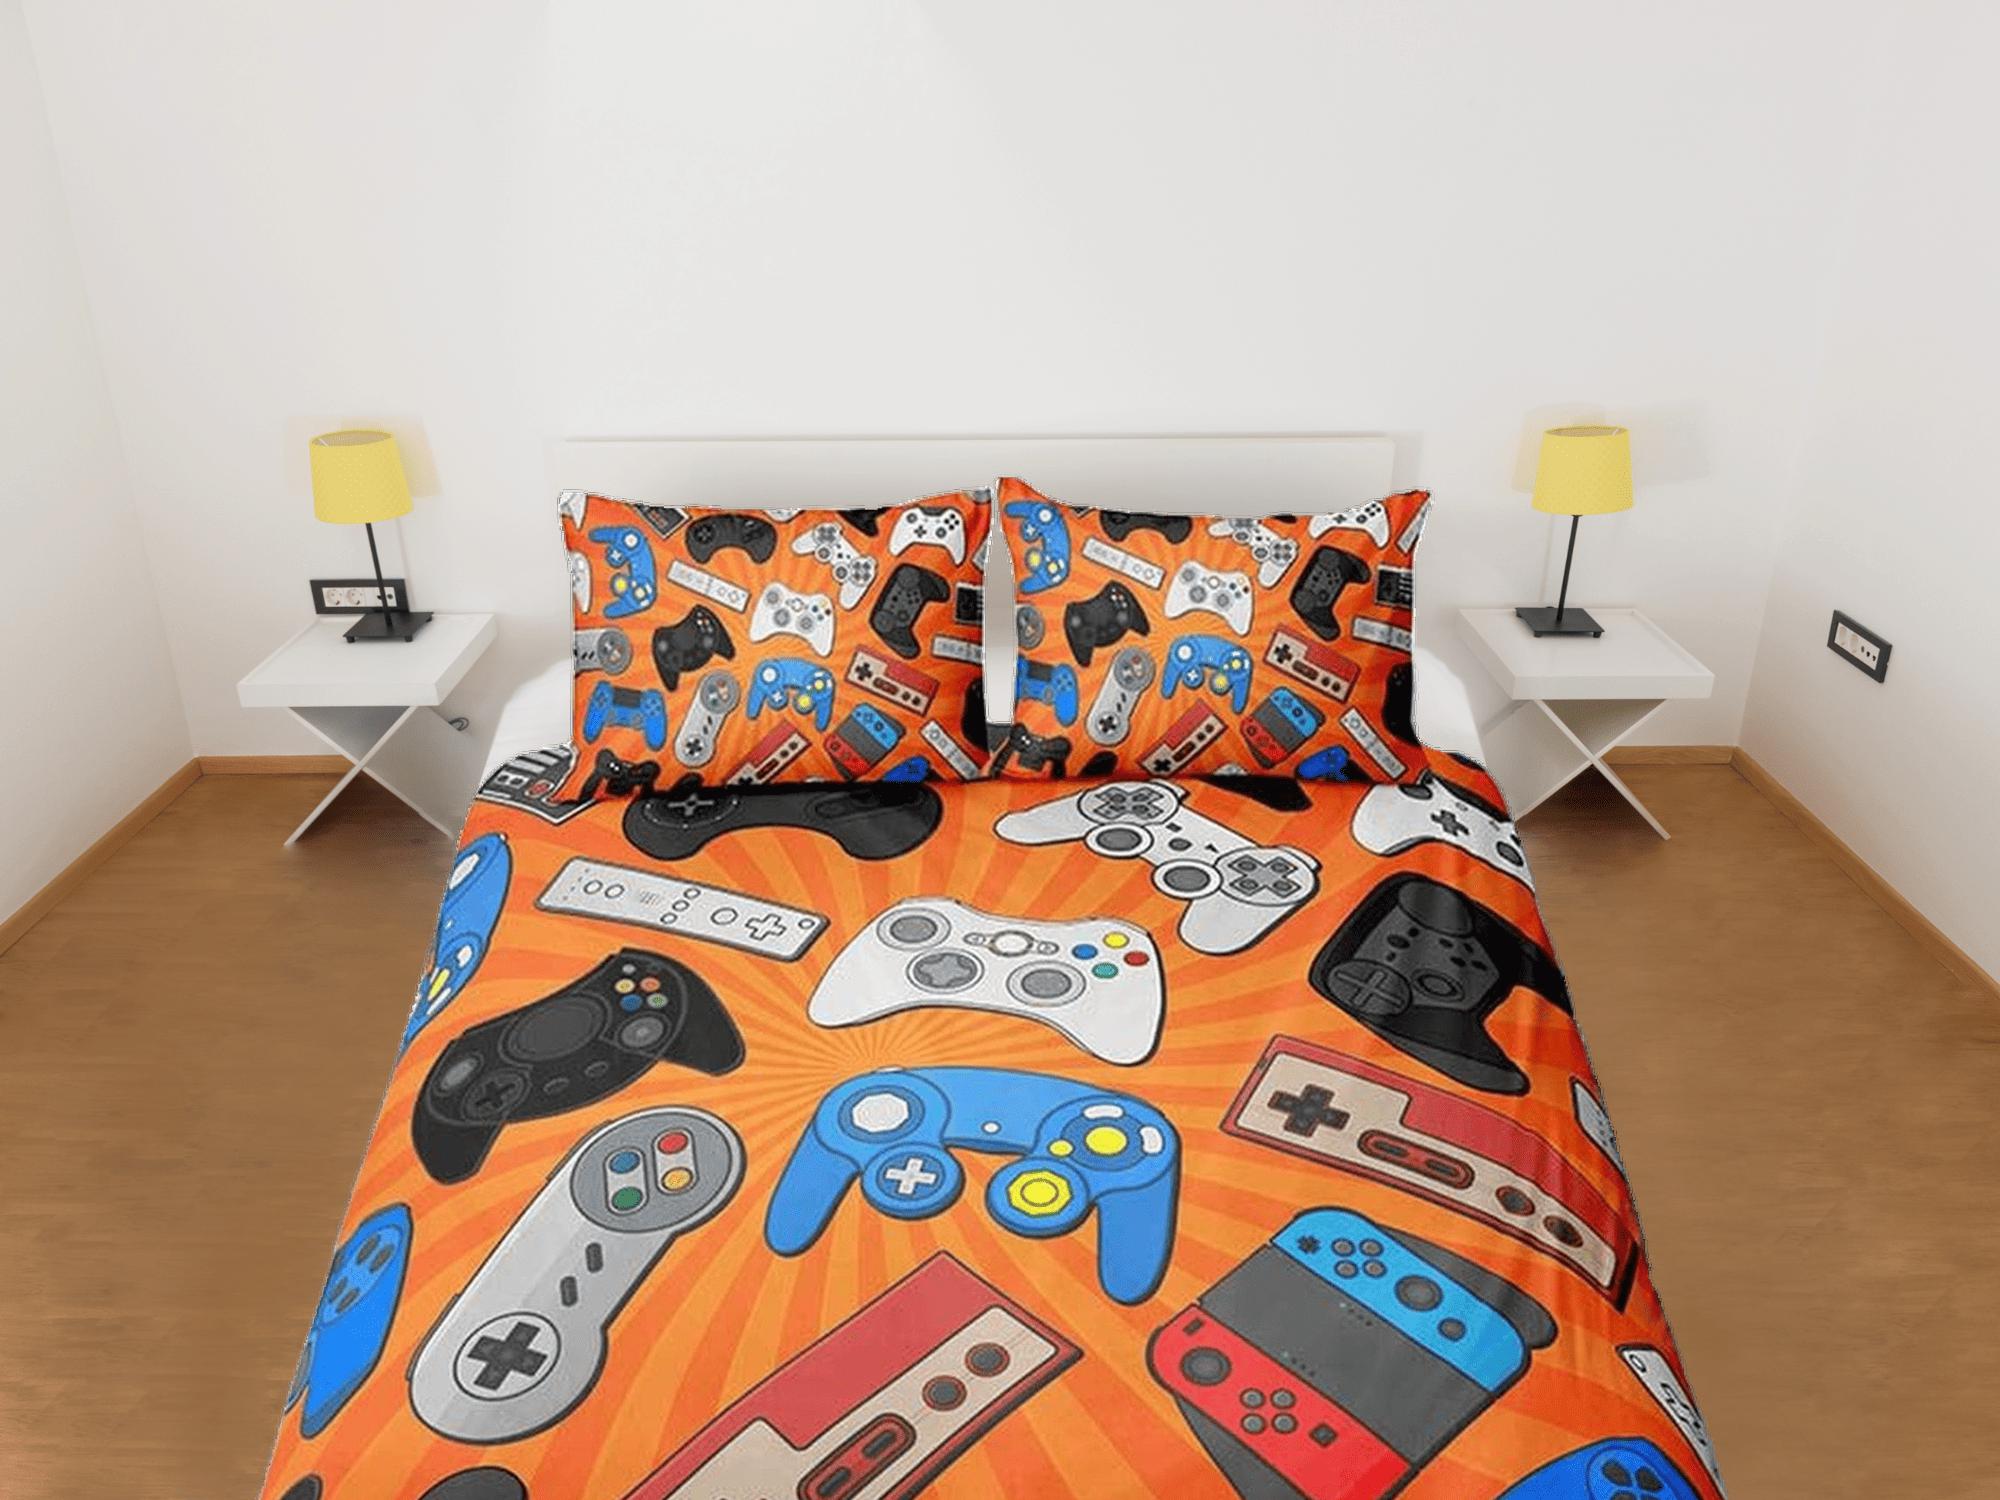 daintyduvet Assorted controllers gamer bedding orange duvet cover, video gamer boyfriend gift bedding set full king queen twin boys bedroom dorm bedding